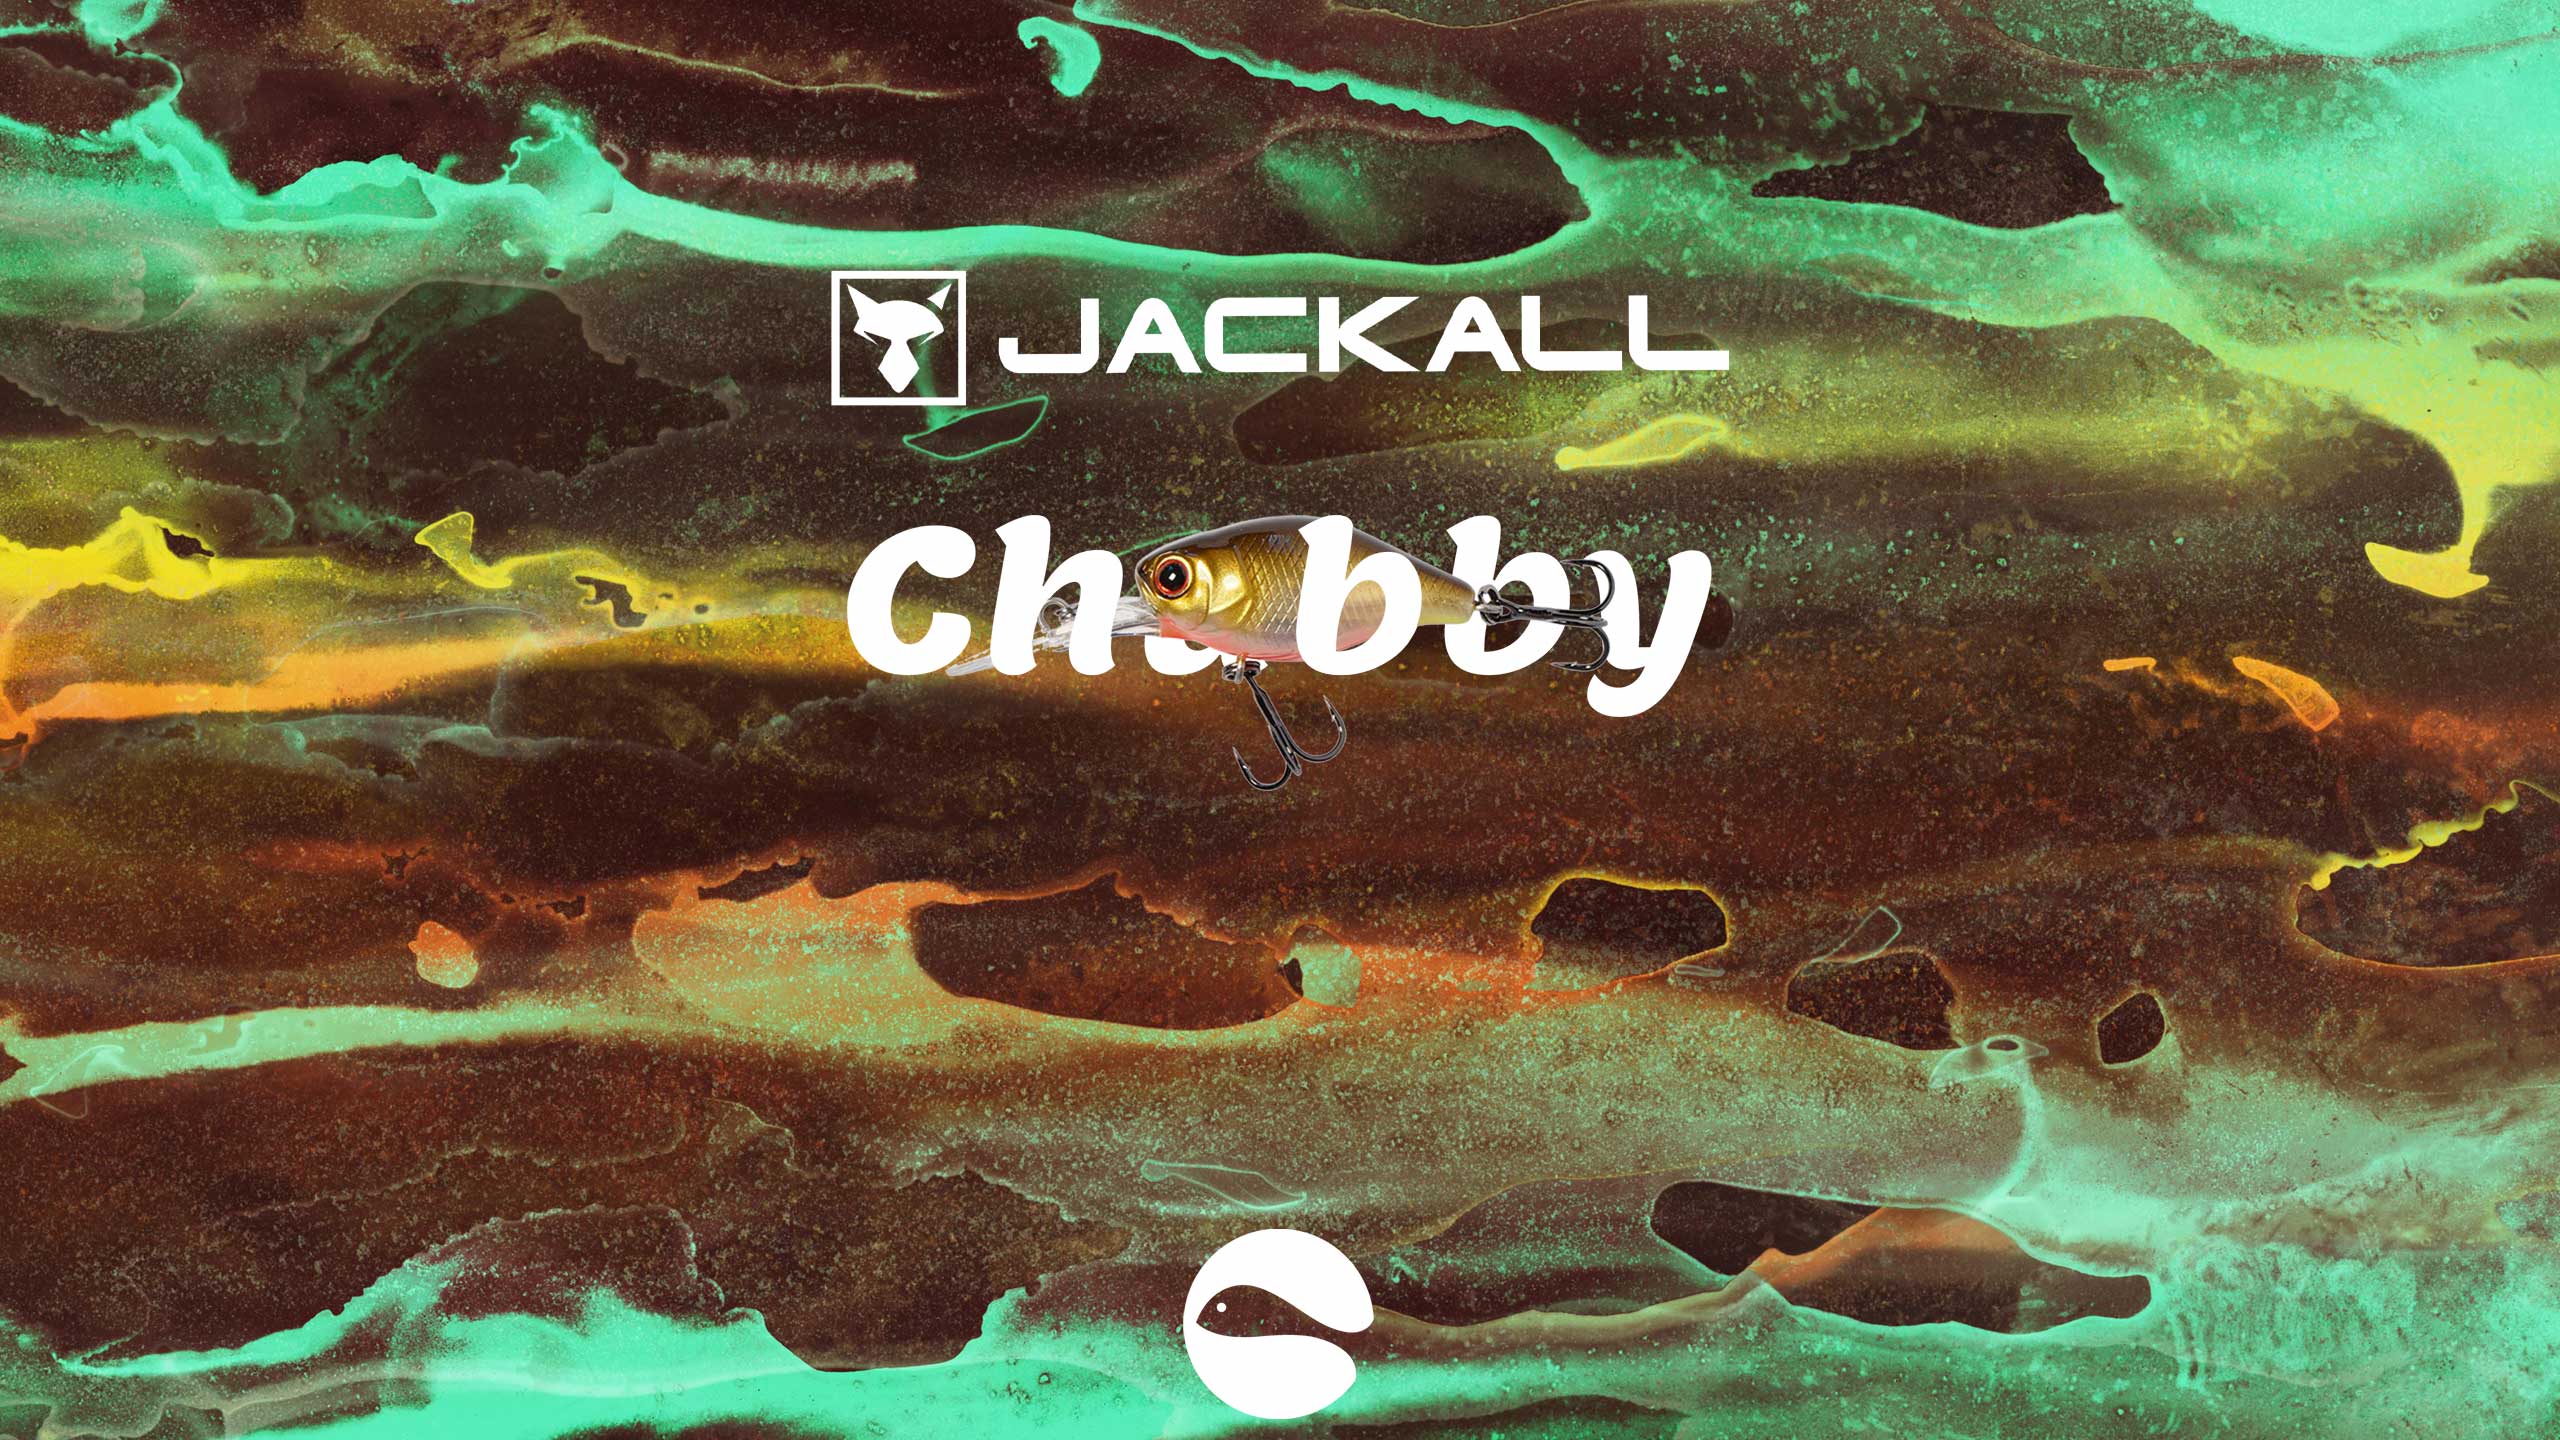 JAckall Chubby mobile